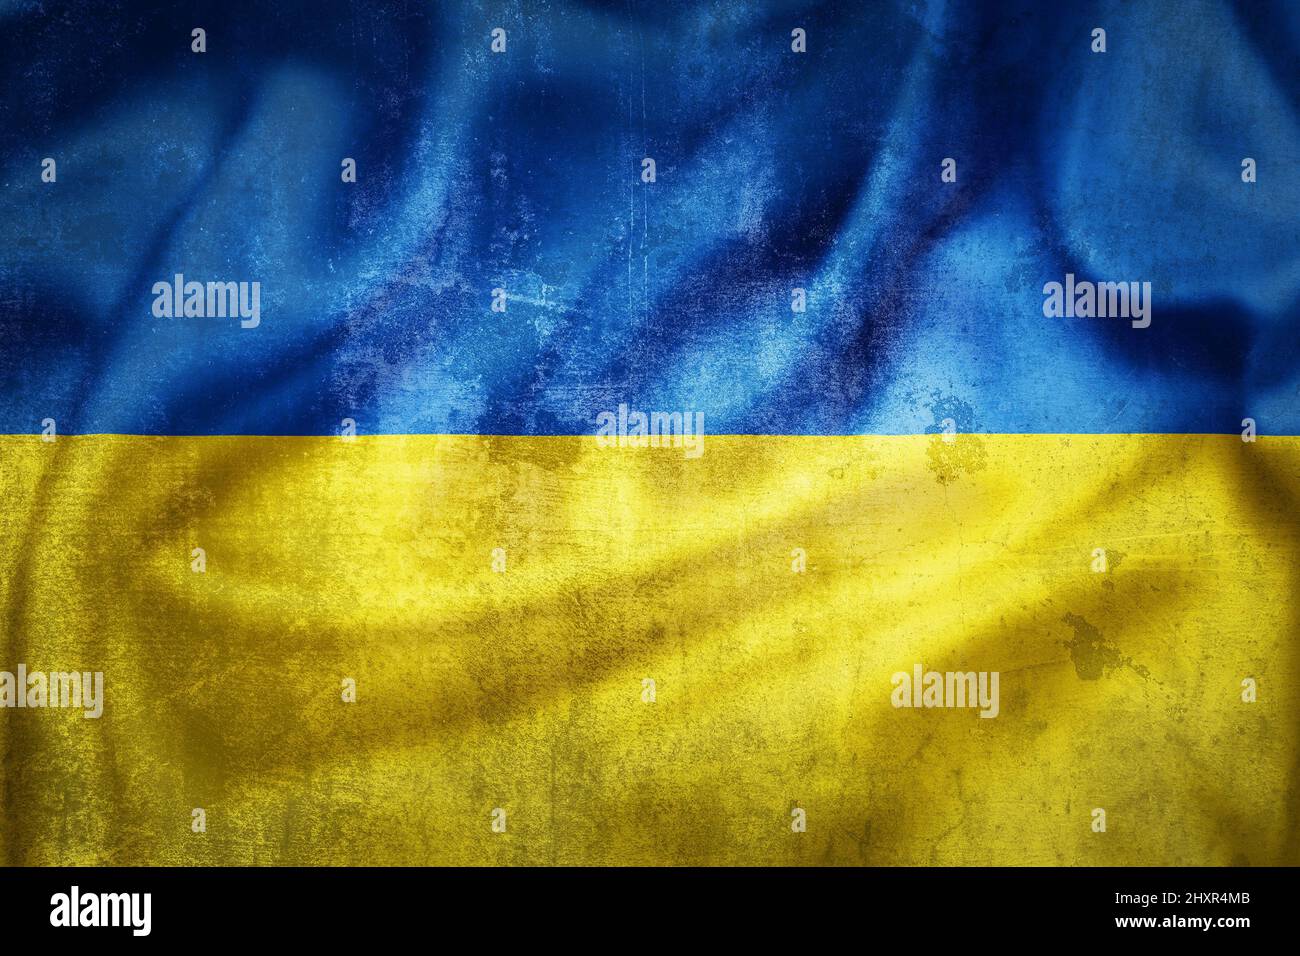 Grunge flag of Ukraine illustration, concept of tense relations between Ukraine and Russia Stock Photo